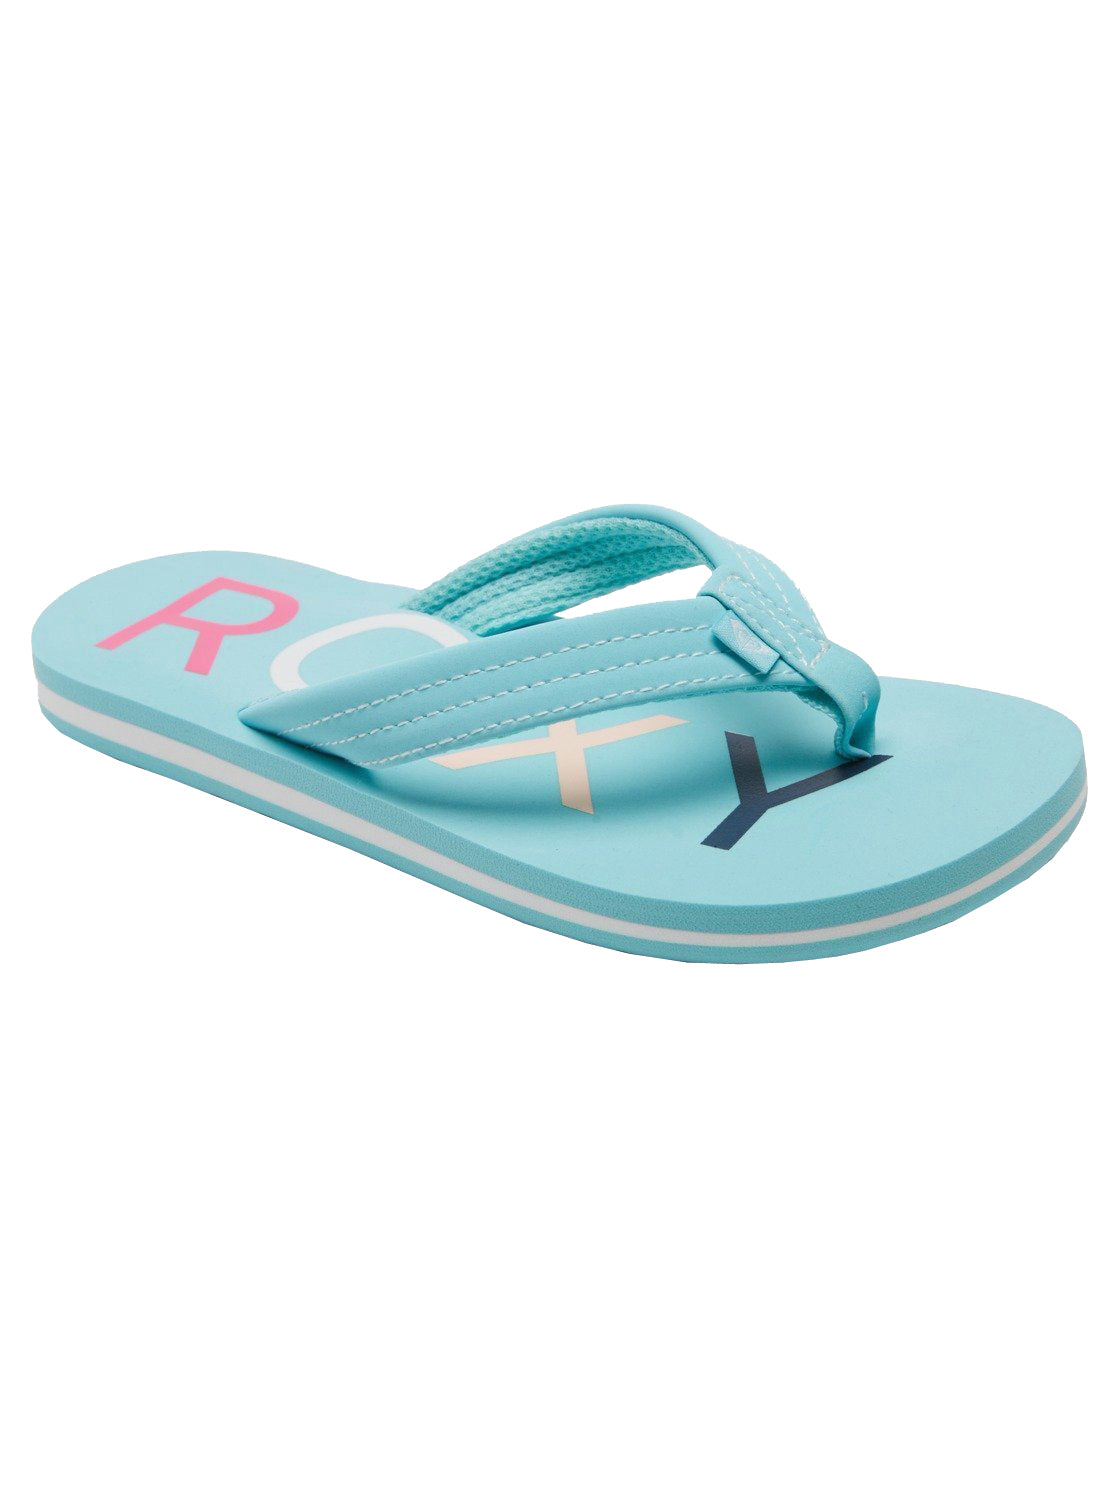 Roxy Vista 3 Girls Sandal LTB-Light Blue 13 C